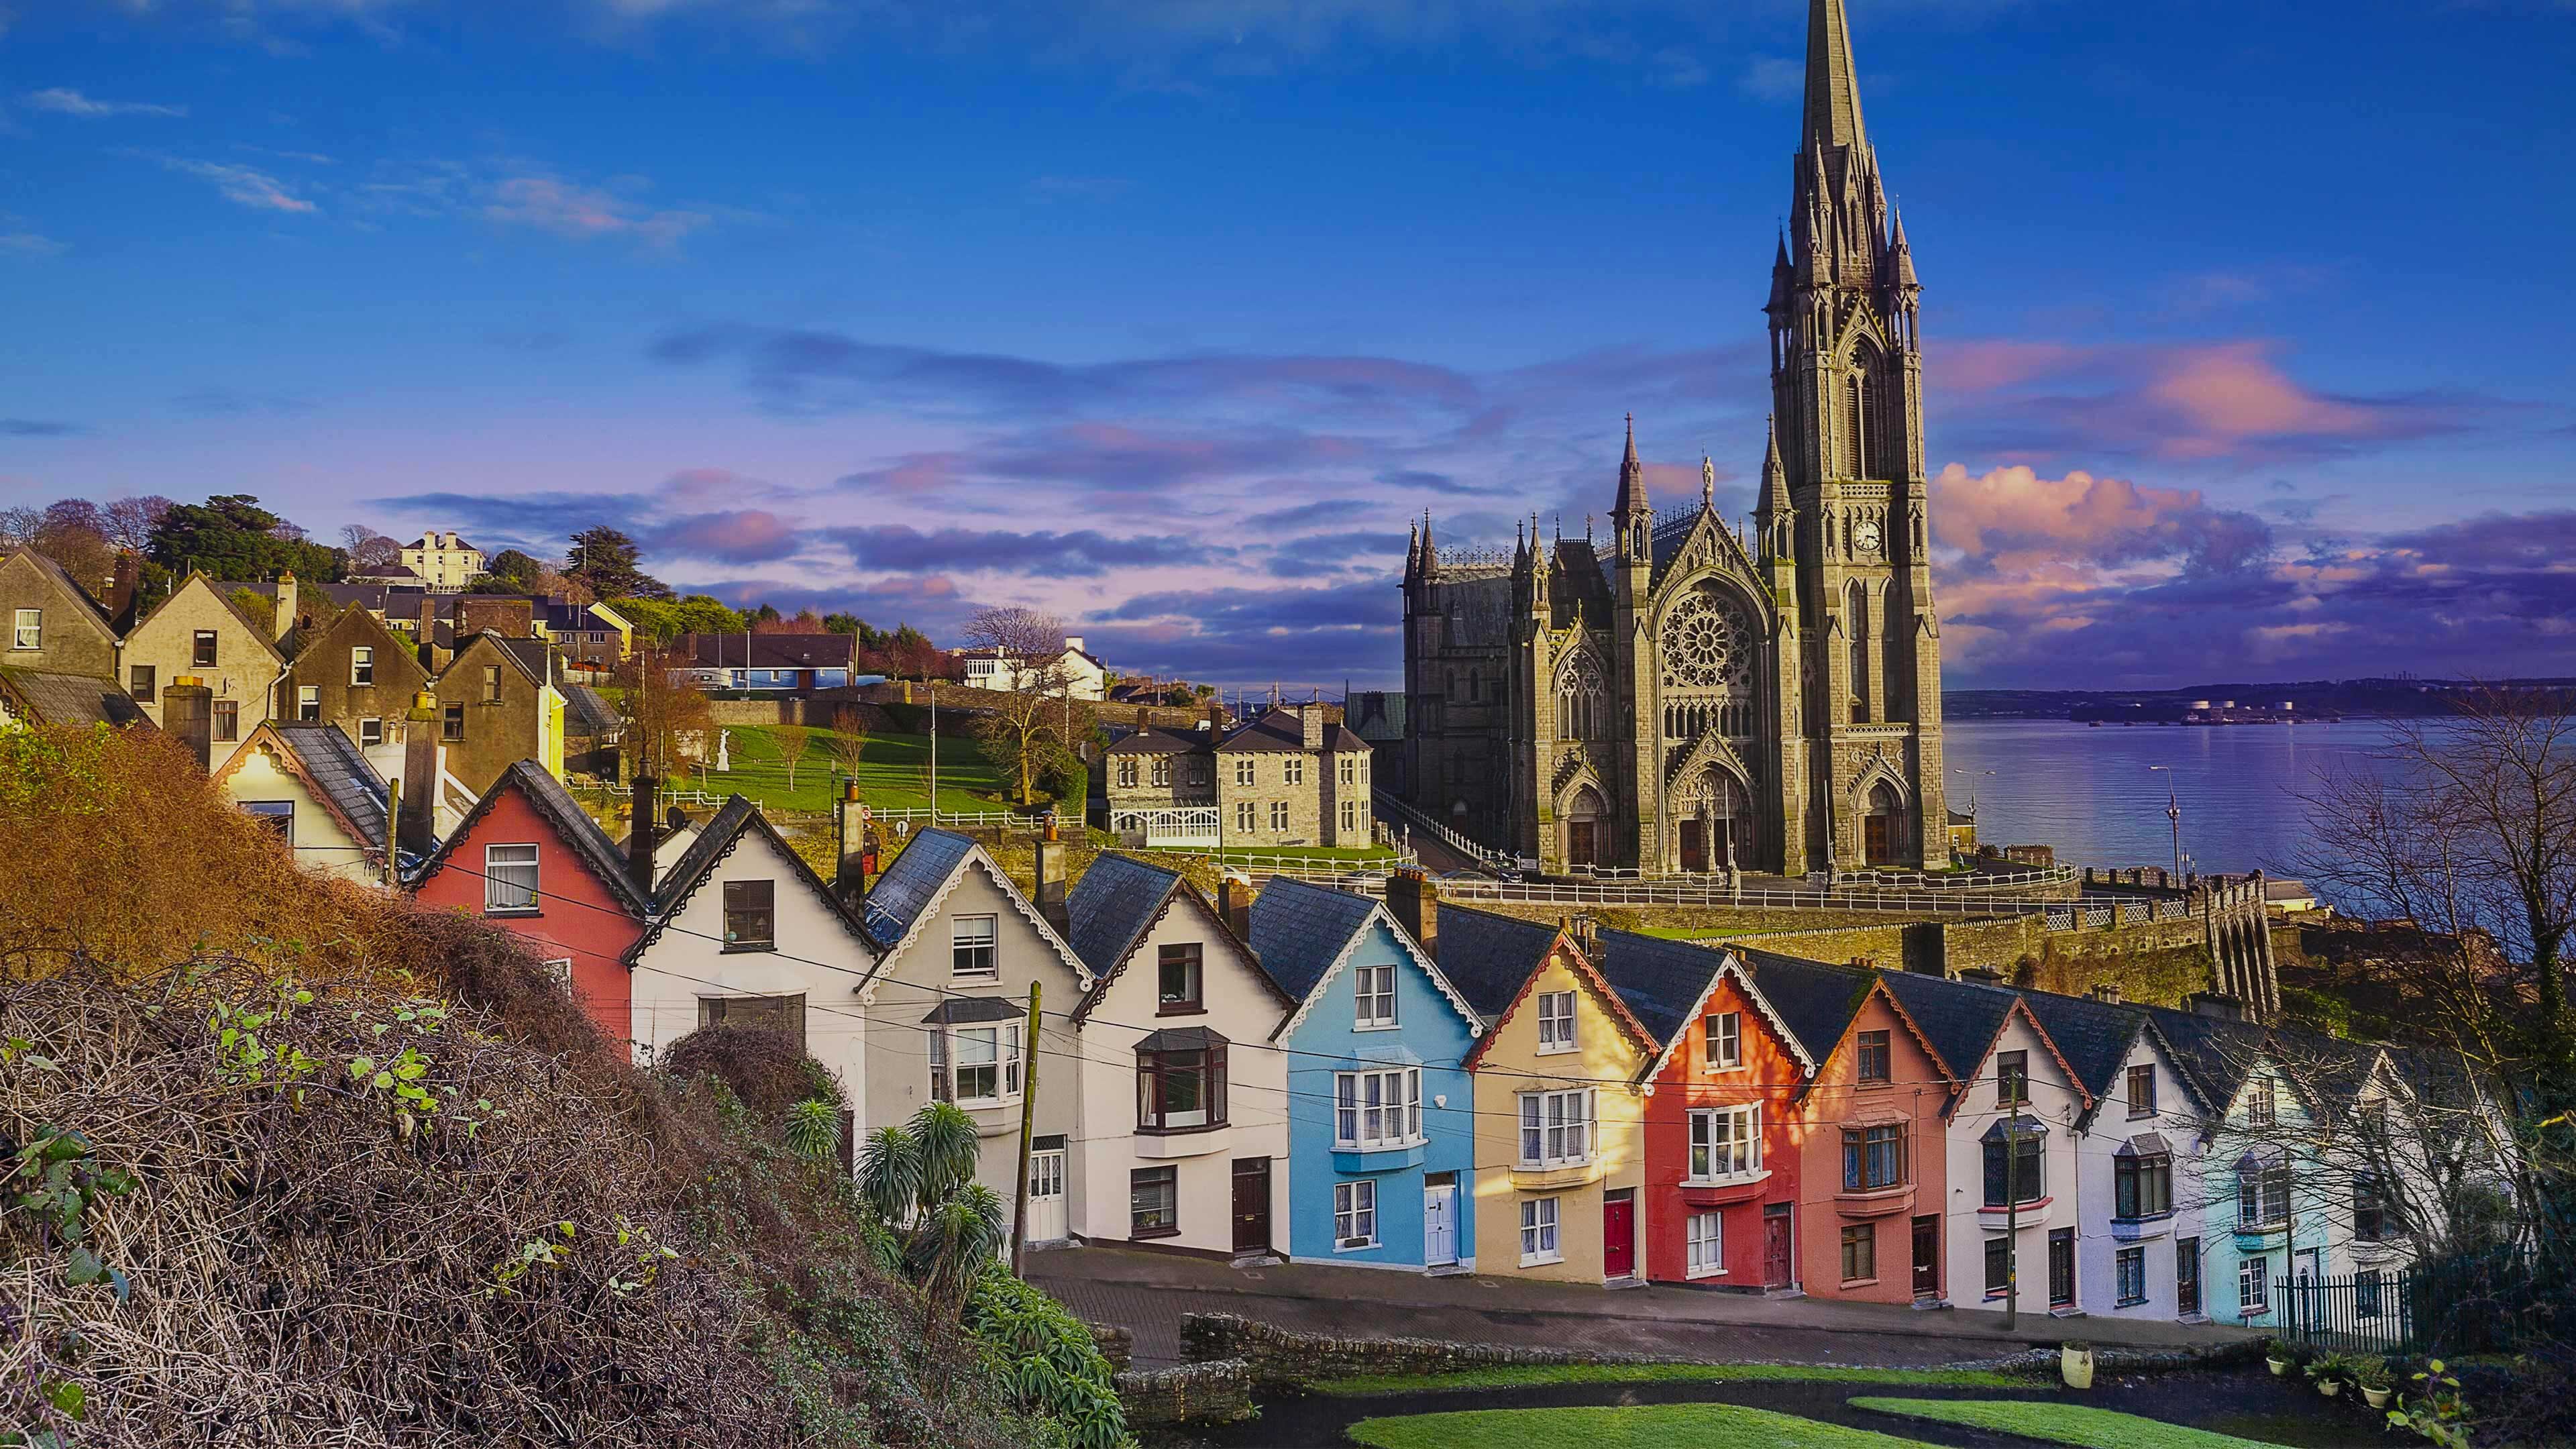 10 Best Cobh Hotels, Ireland (From $67) - kurikku.co.uk